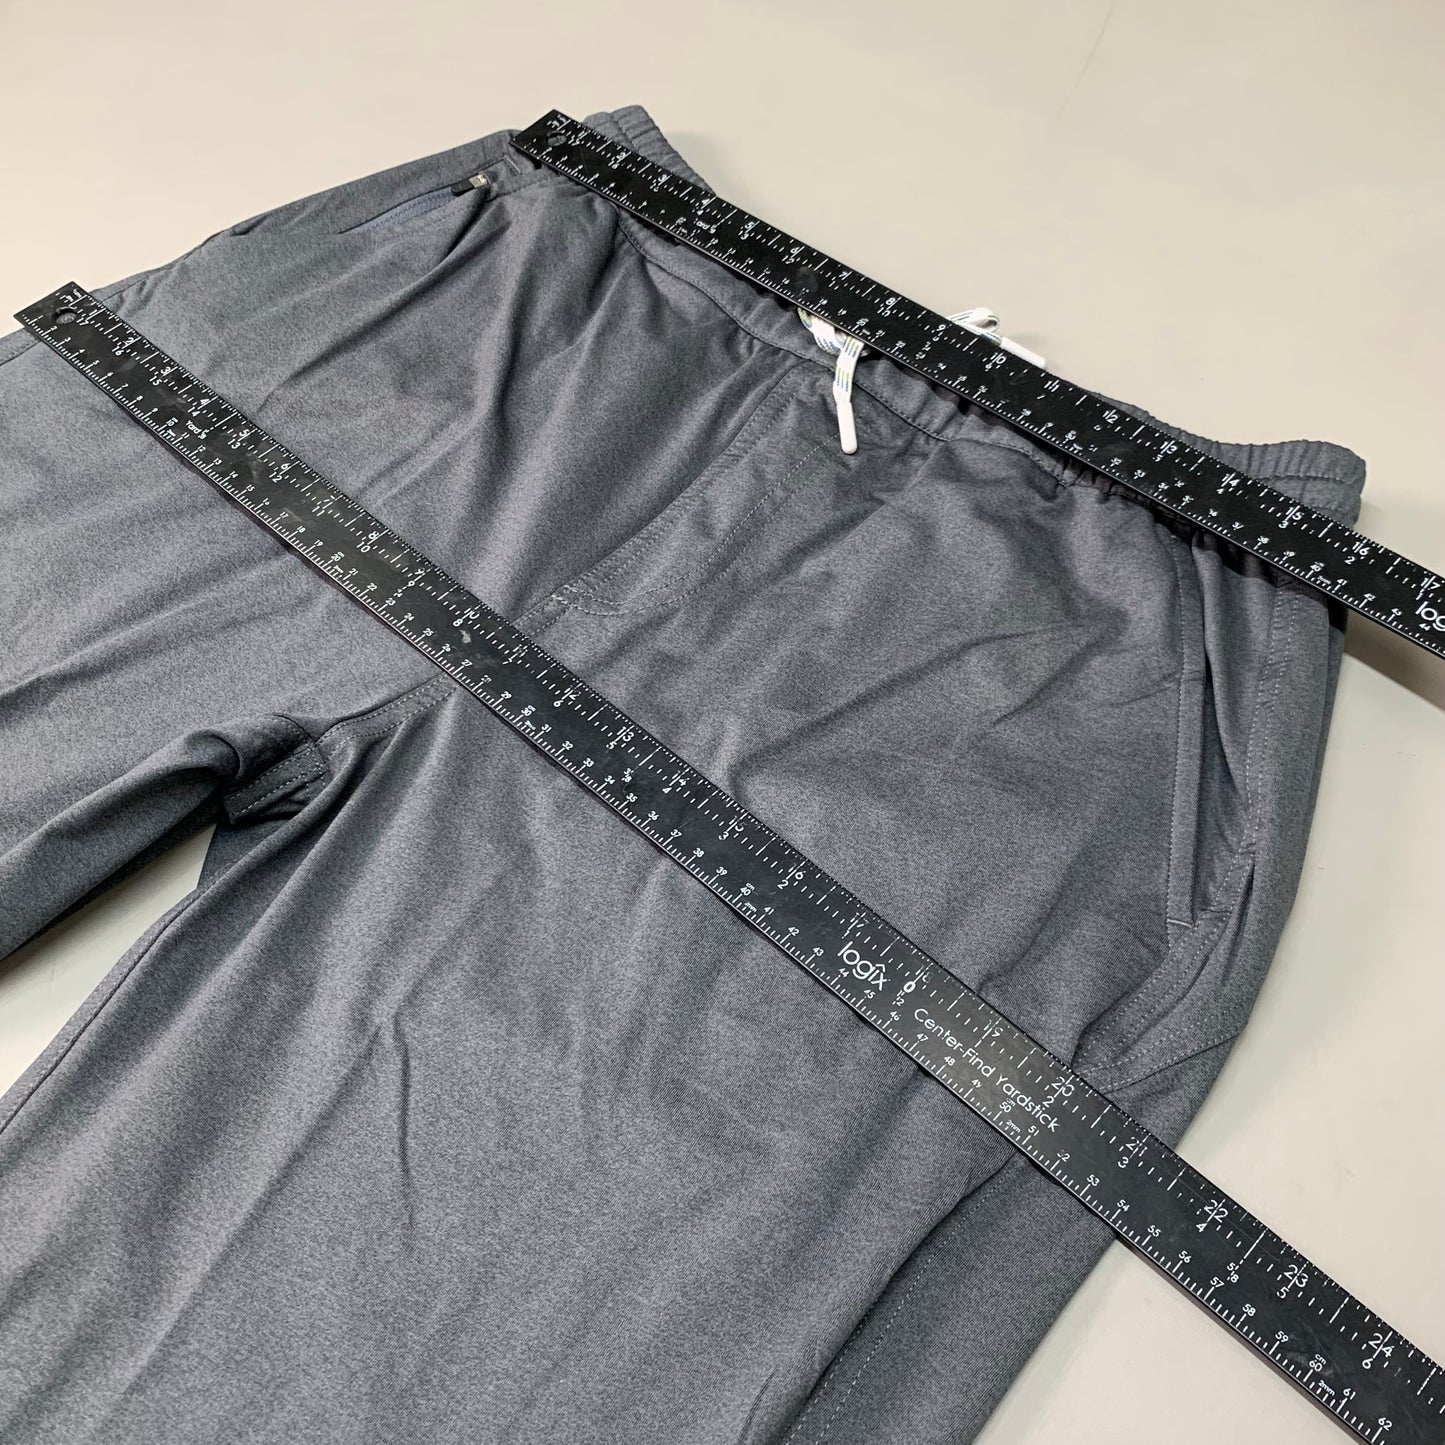 NATHAN 365 Jogger Pants Men's Sz Medium Dark Charcoal NS50620-80078-M (New)